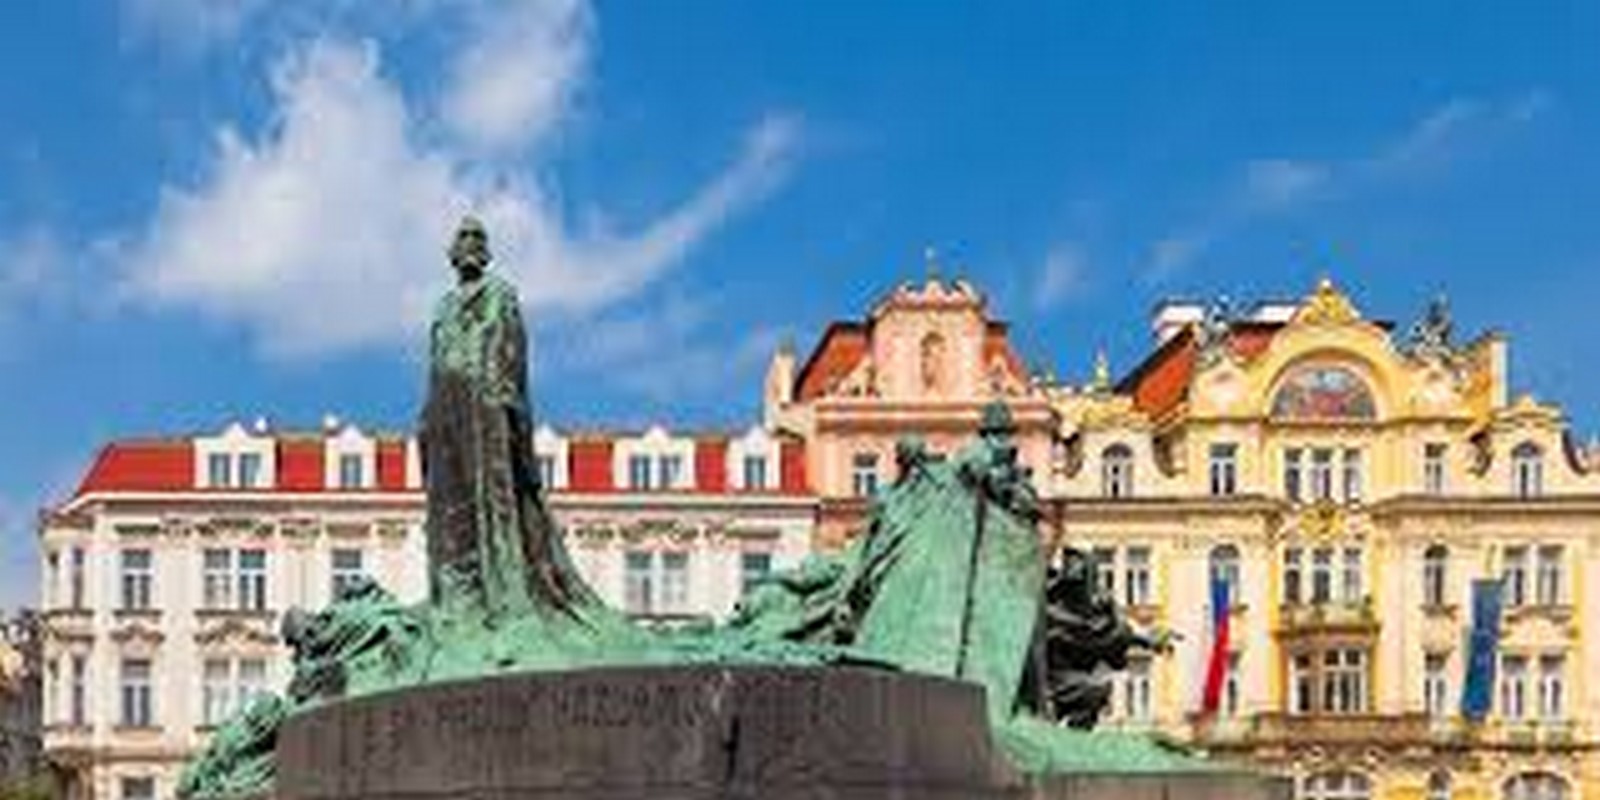 Old Town Square, Prague, Czech Republic - Sheet2